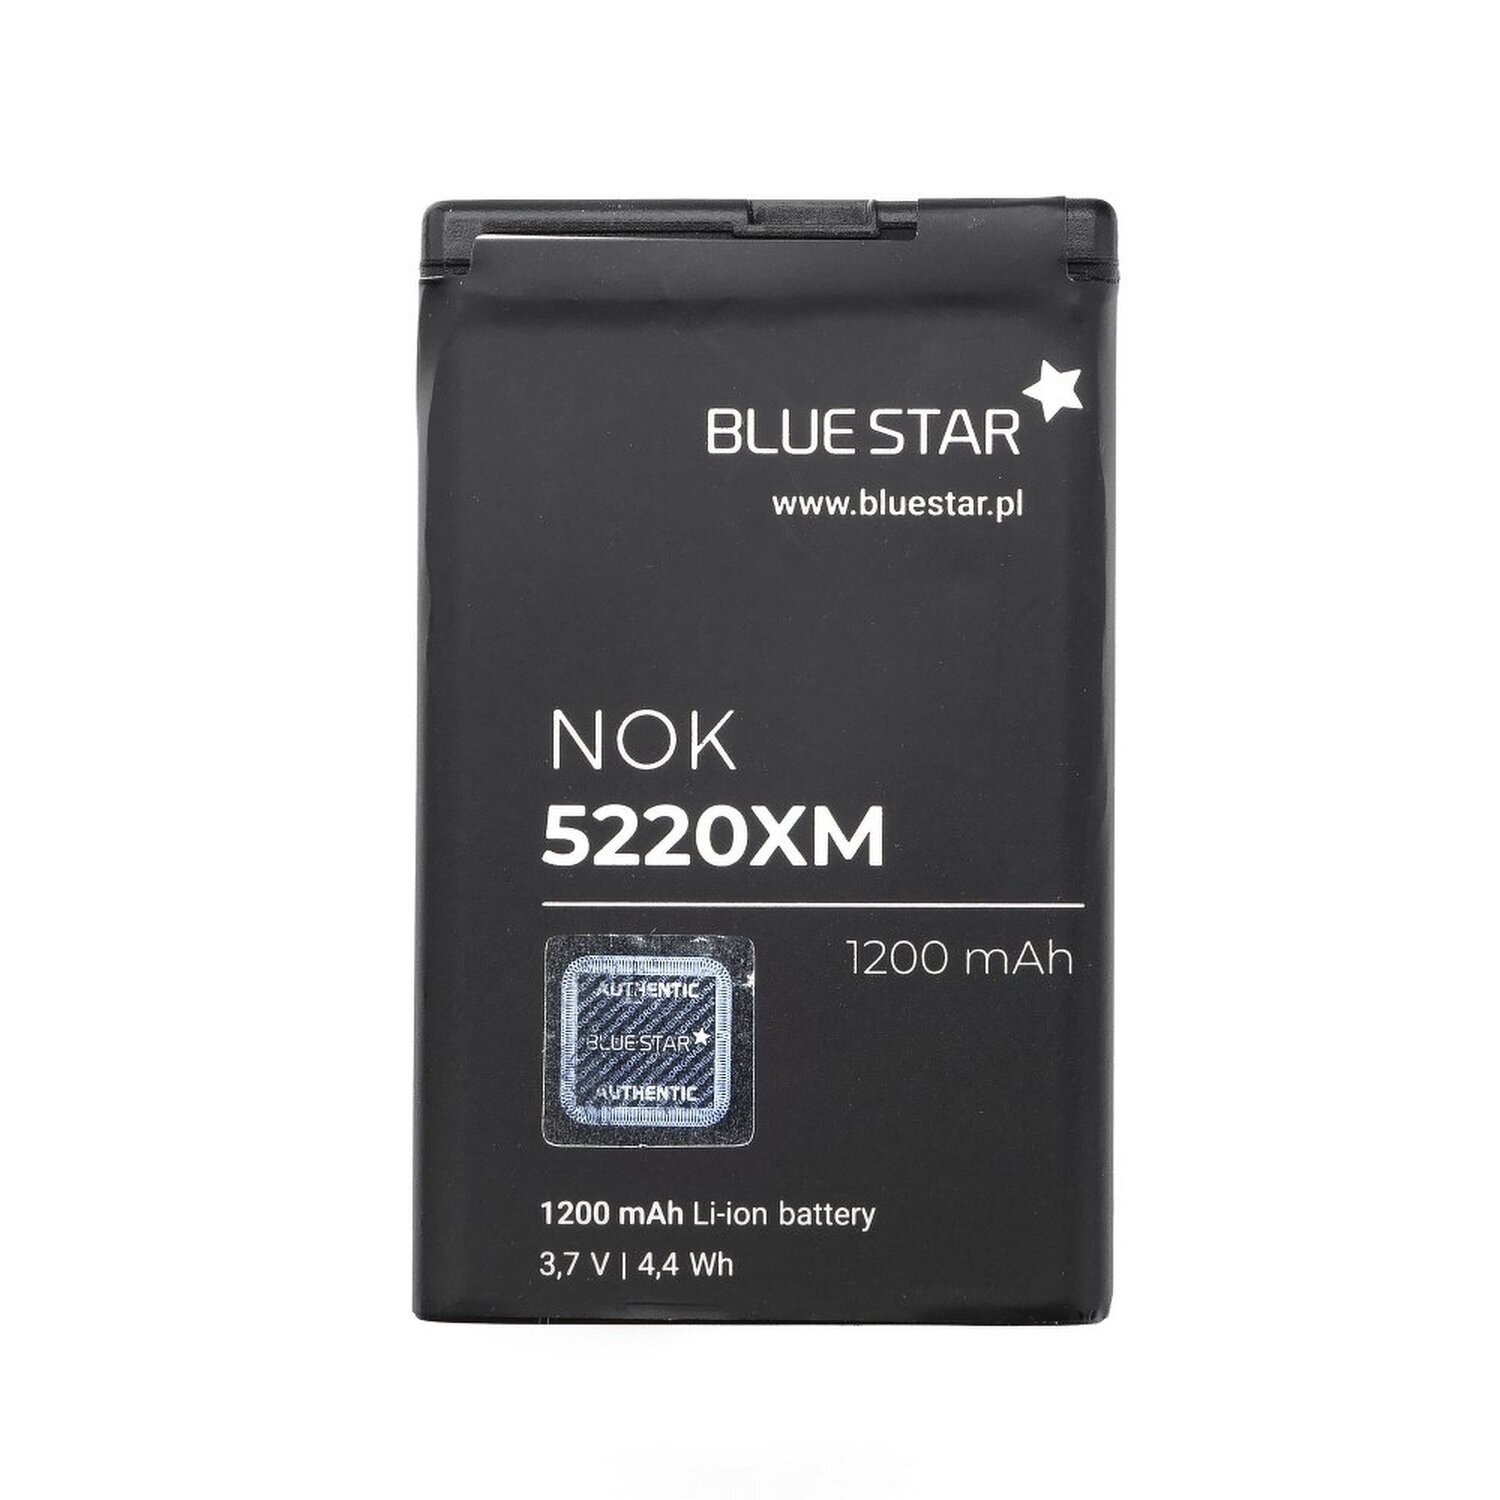 BLUESTAR 5630 Handyakku für XM / Nokia 5220 Akku Li-Ion XM